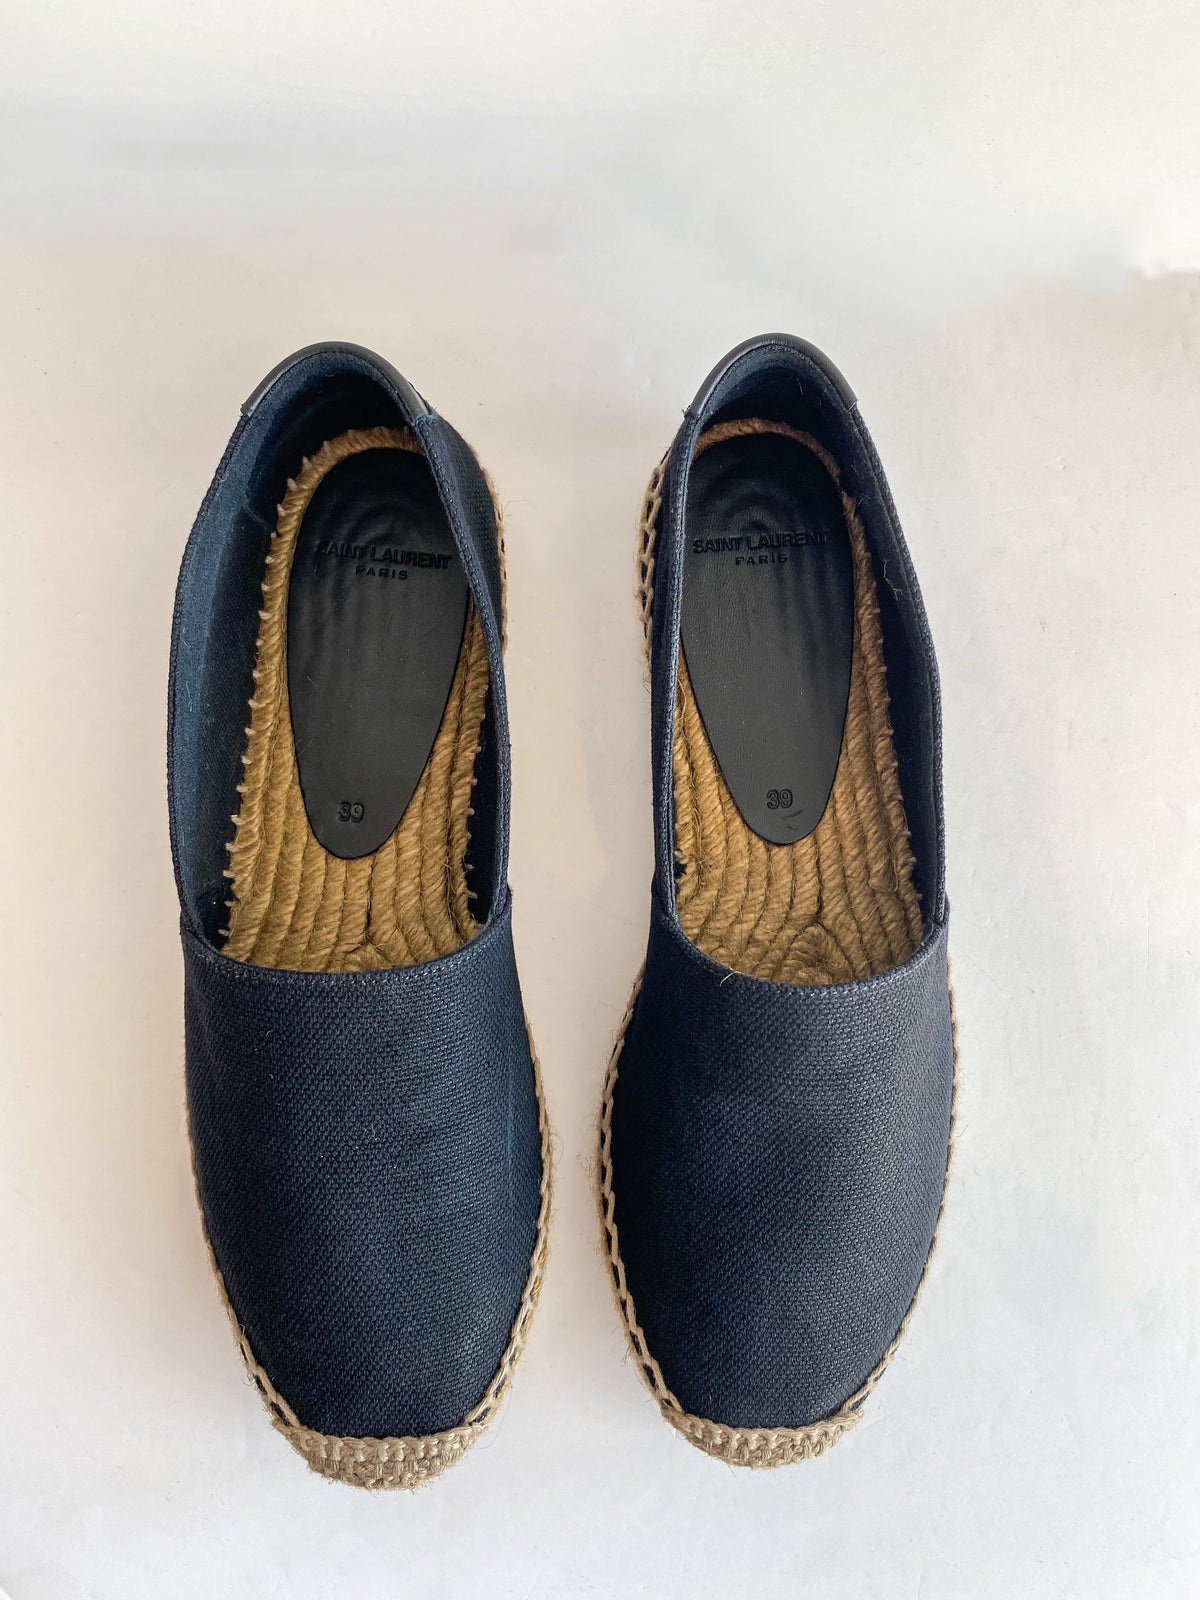 Saint Laurent Espadrilles Embroidered Black Top of Shoes